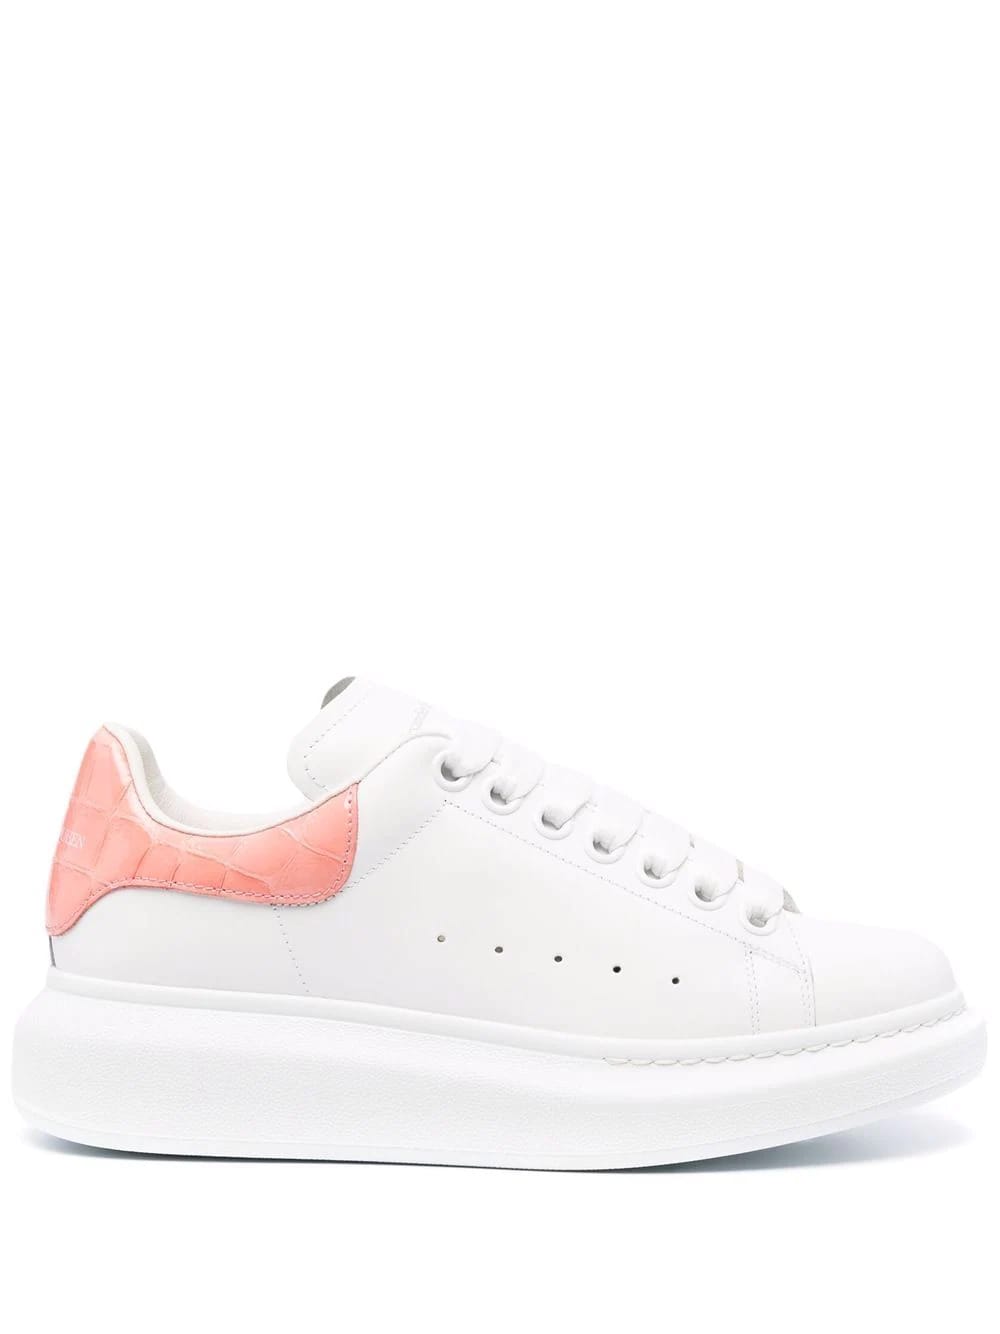 Buy Alexander McQueen Woman White Oversize Sneakers With Peach Pink Crocodile Spoiler online, shop Alexander McQueen shoes with free shipping